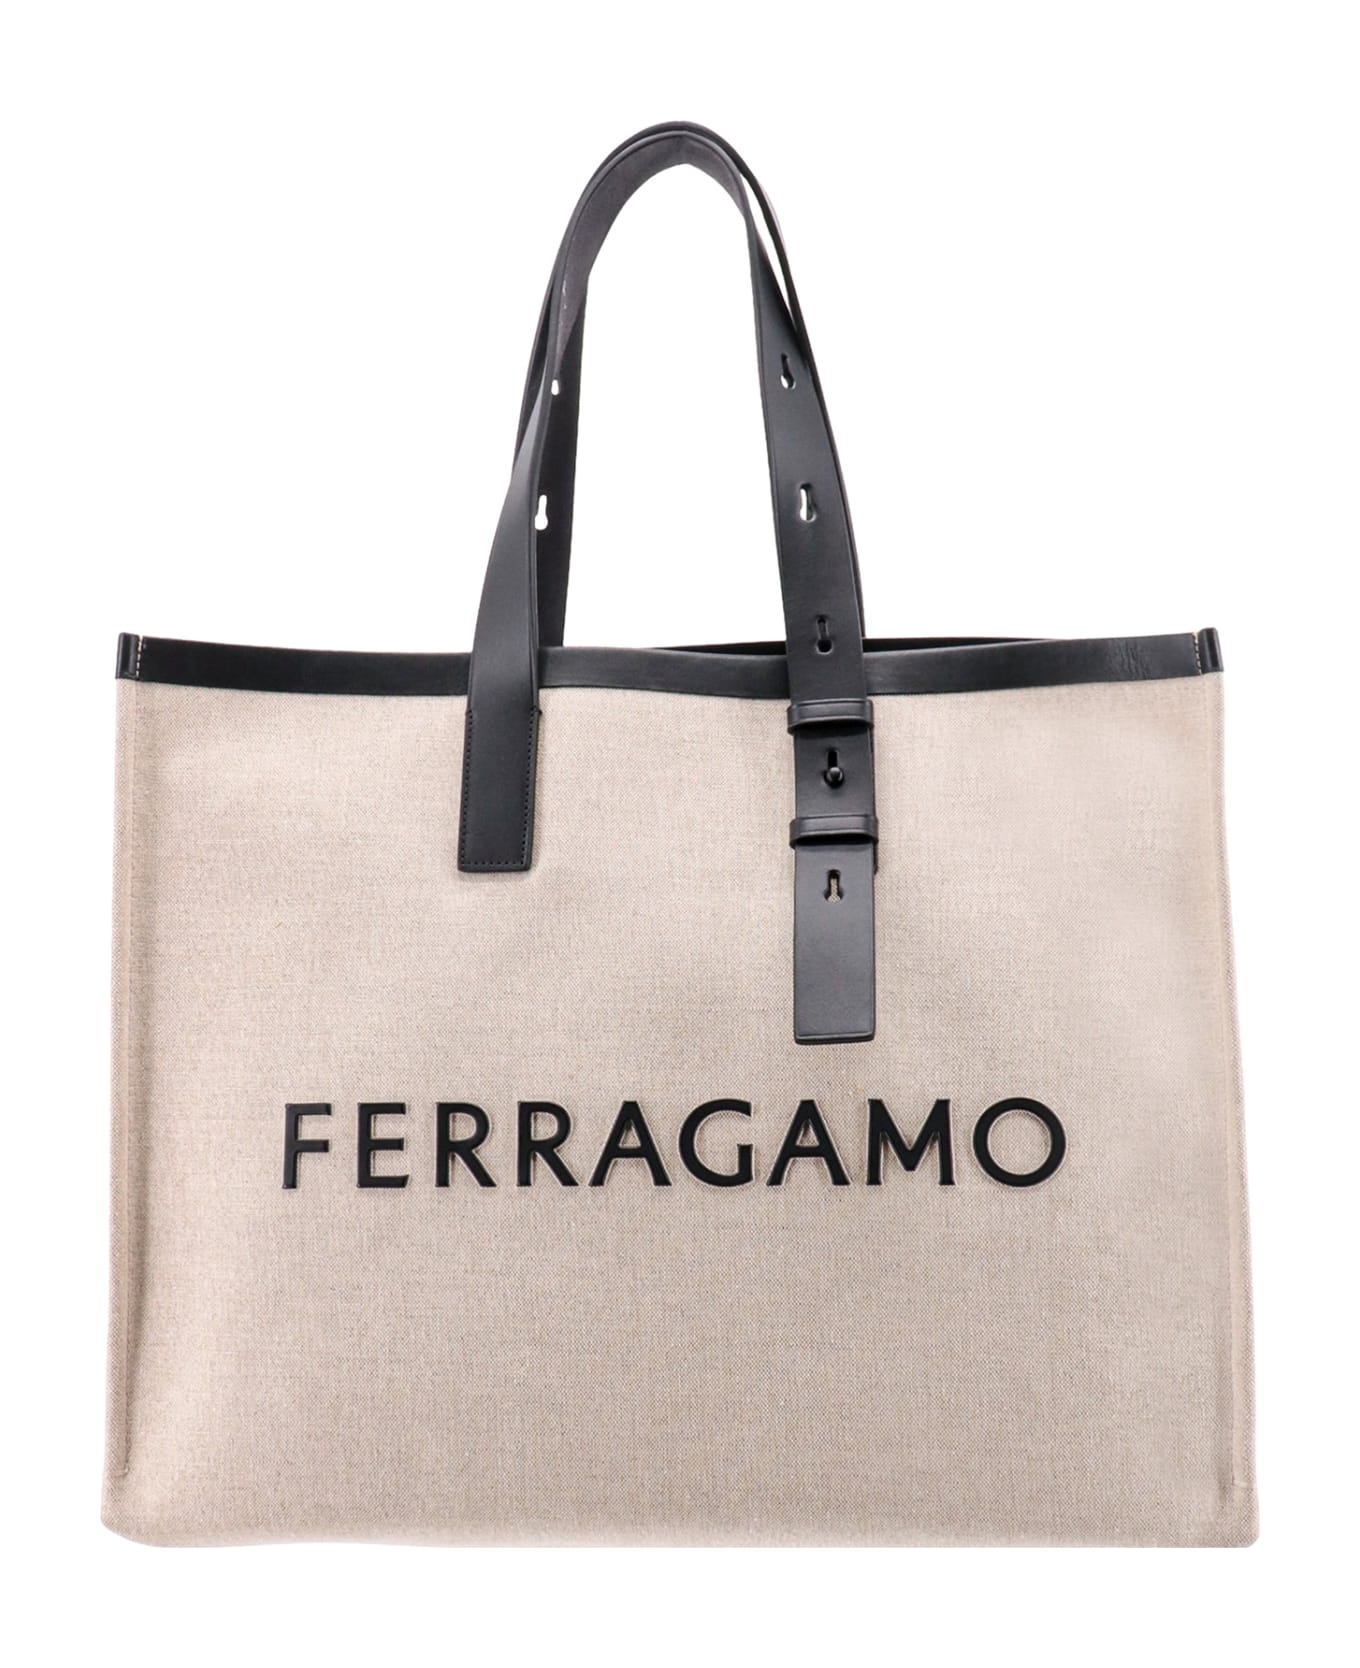 Ferragamo Handbag - Nero トートバッグ